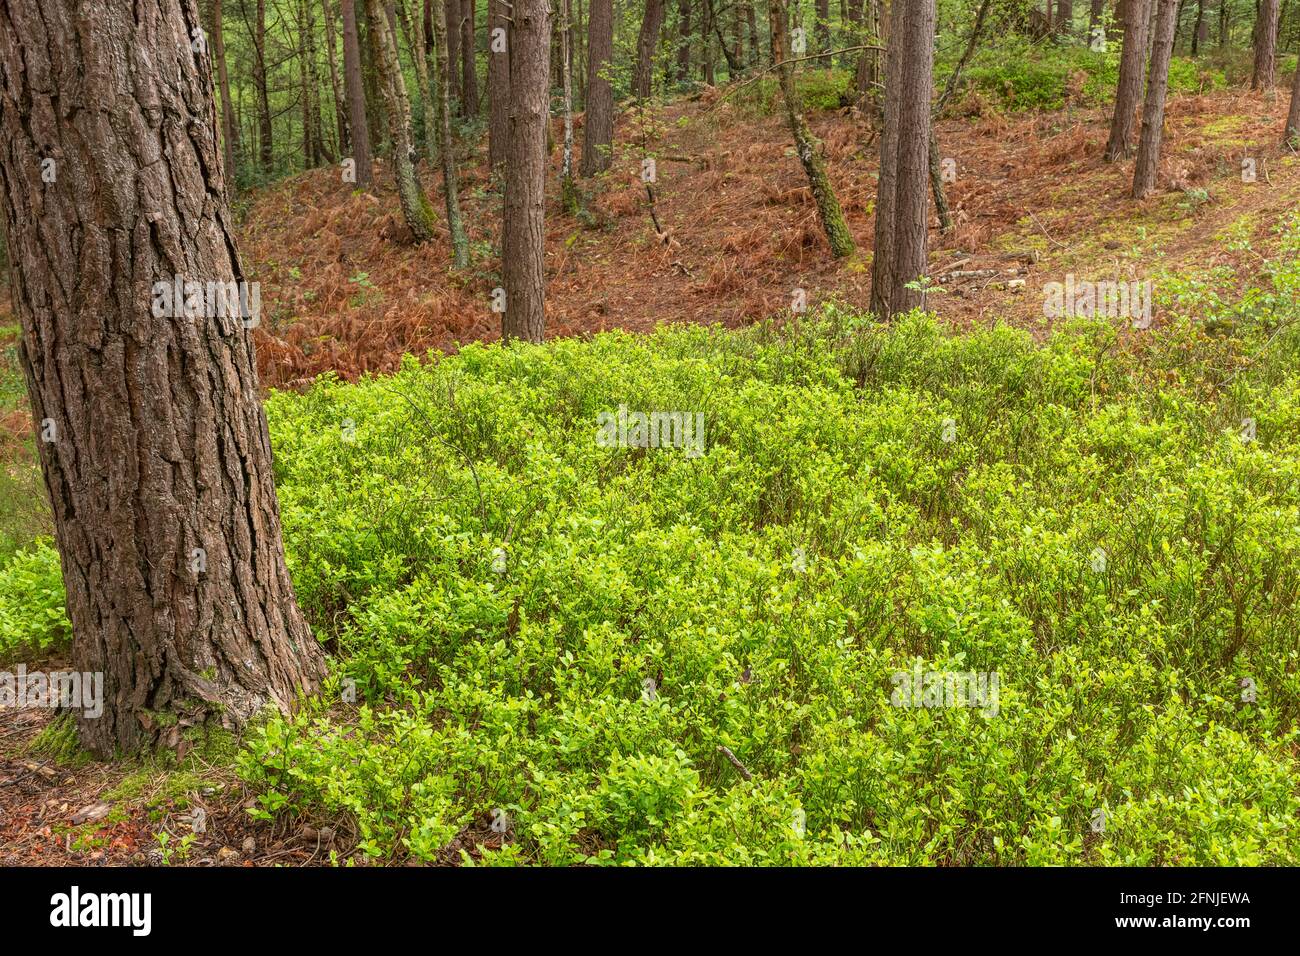 Understorey vegetation in a scots pine (Pinus sylvestris) forest plantation in Surrey, UK, including bilberry (Vaccinium myrtillus) Stock Photo